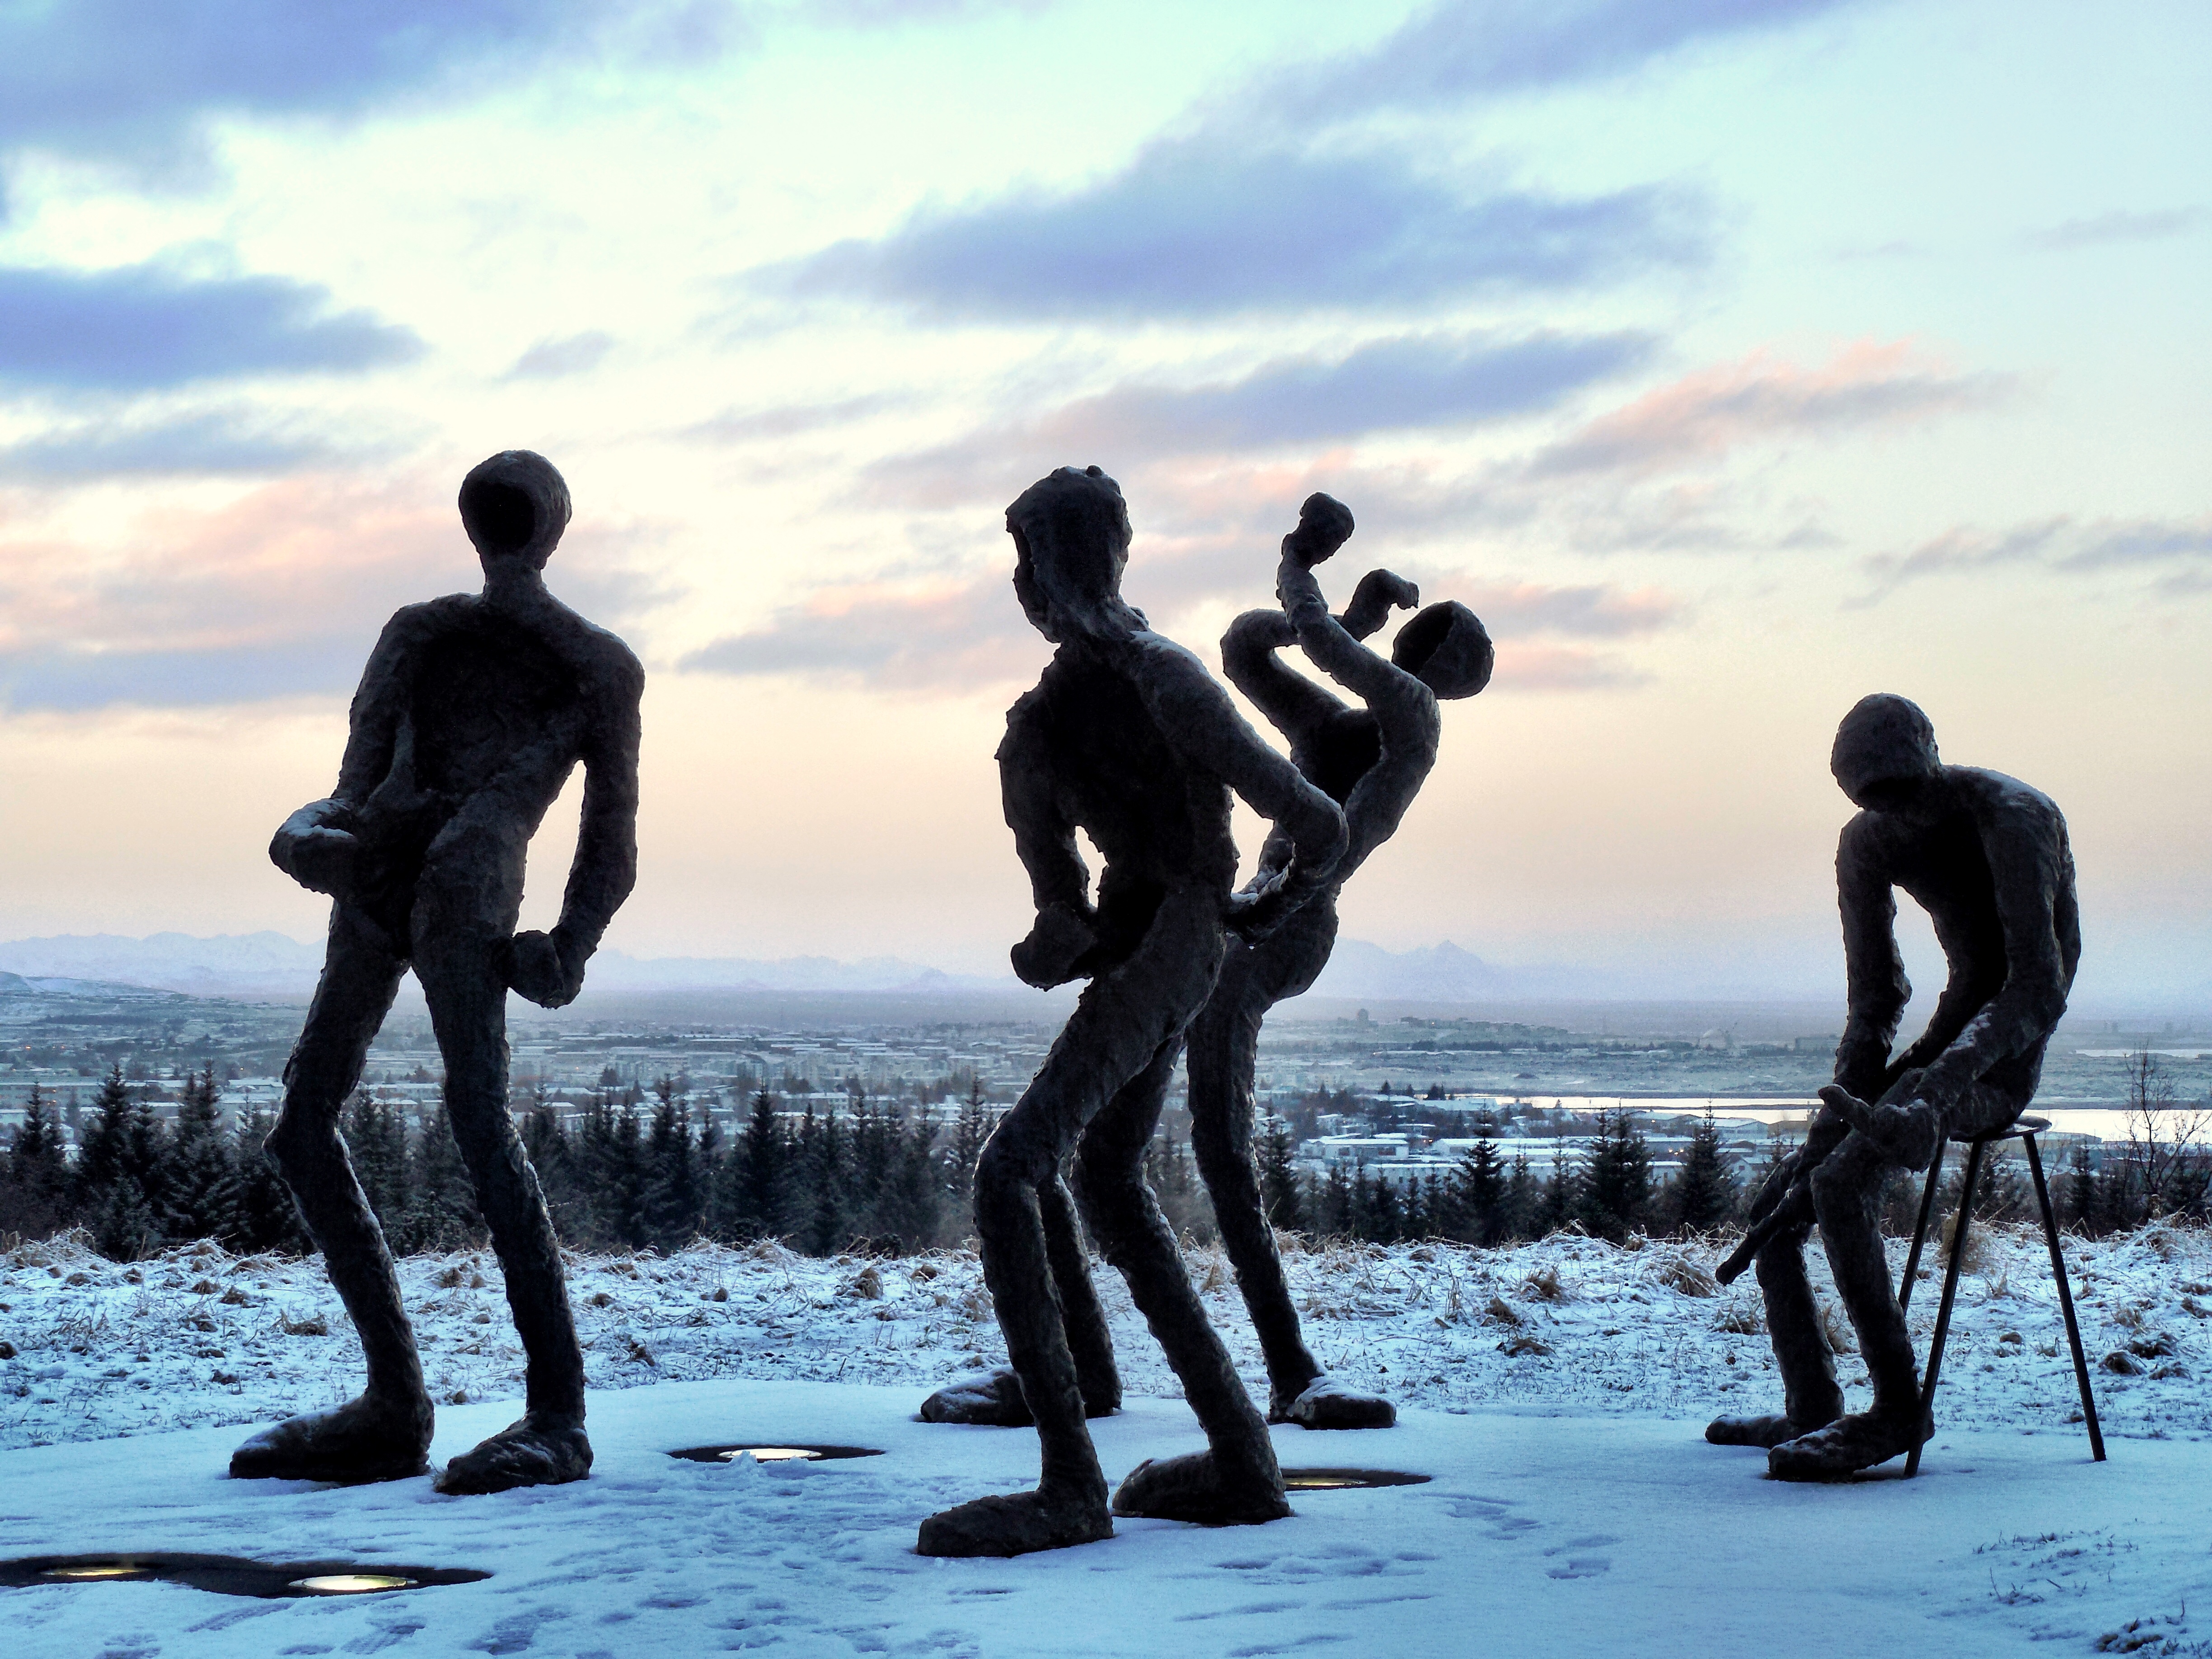 The Dance sculpture in Reykjavik, Iceland